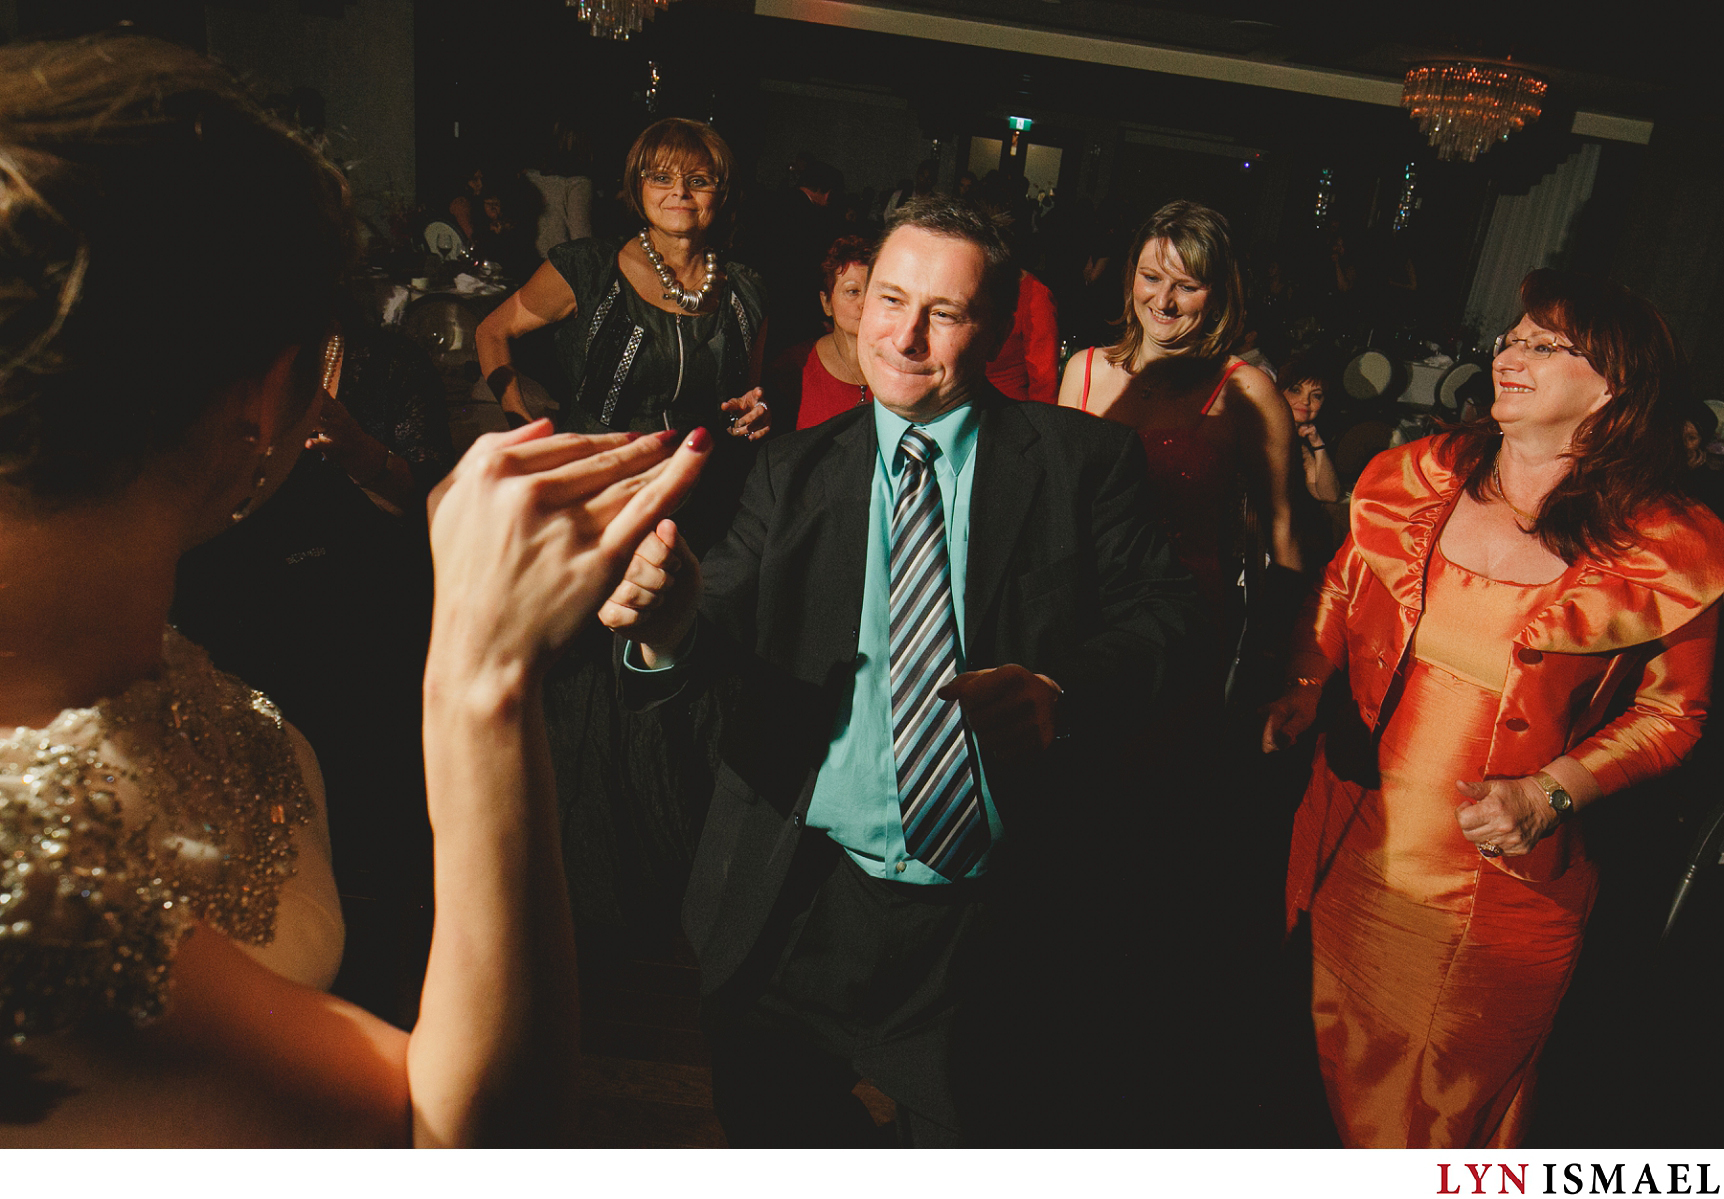 Polish wedding guests dance to Polish pop tunes at a wedding at Cambridge's Whistle Bear Golf Club.